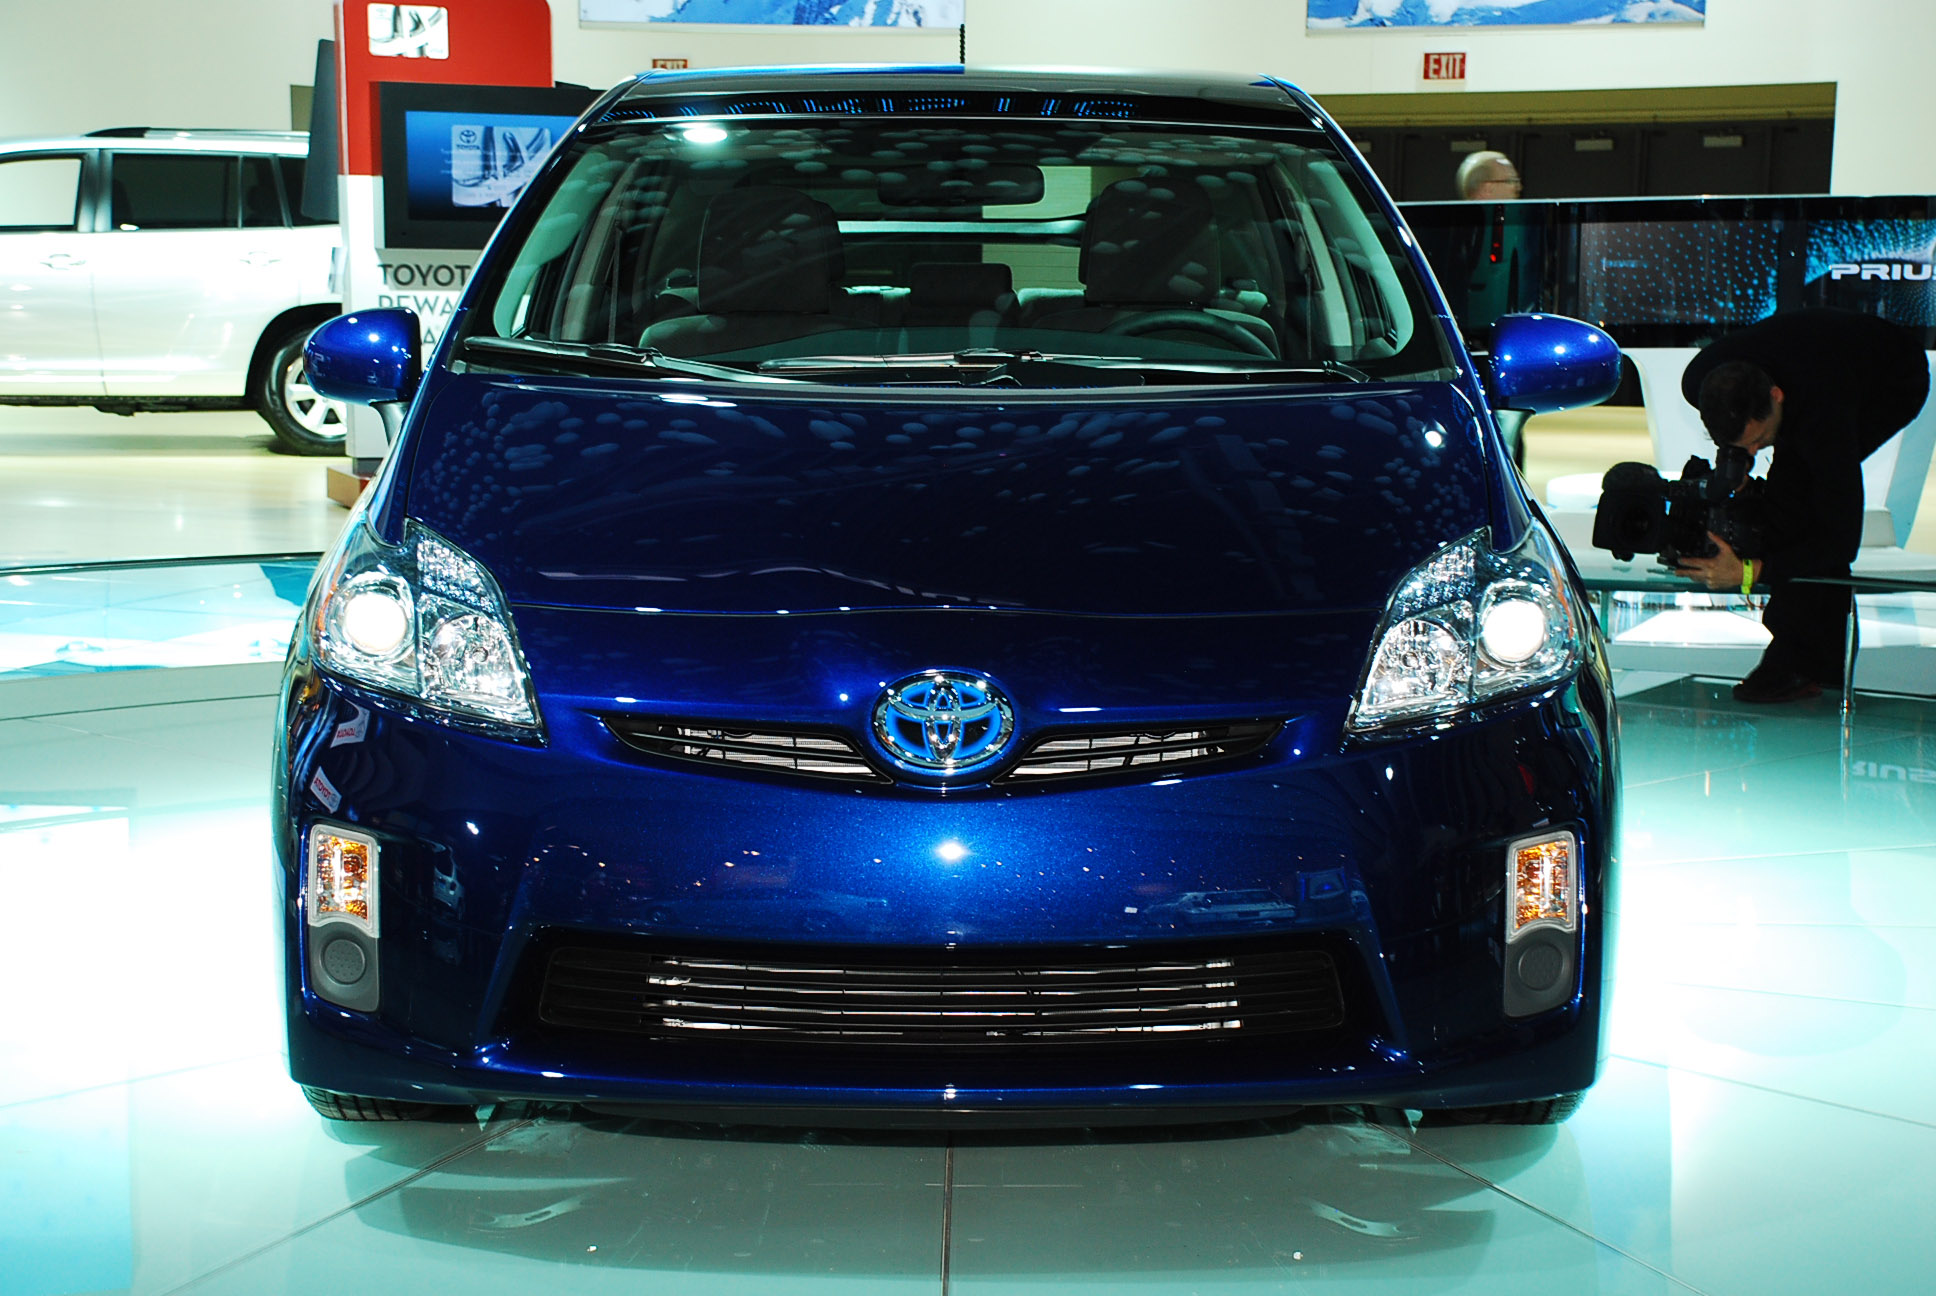 Third-generation Toyota Prius Detroit